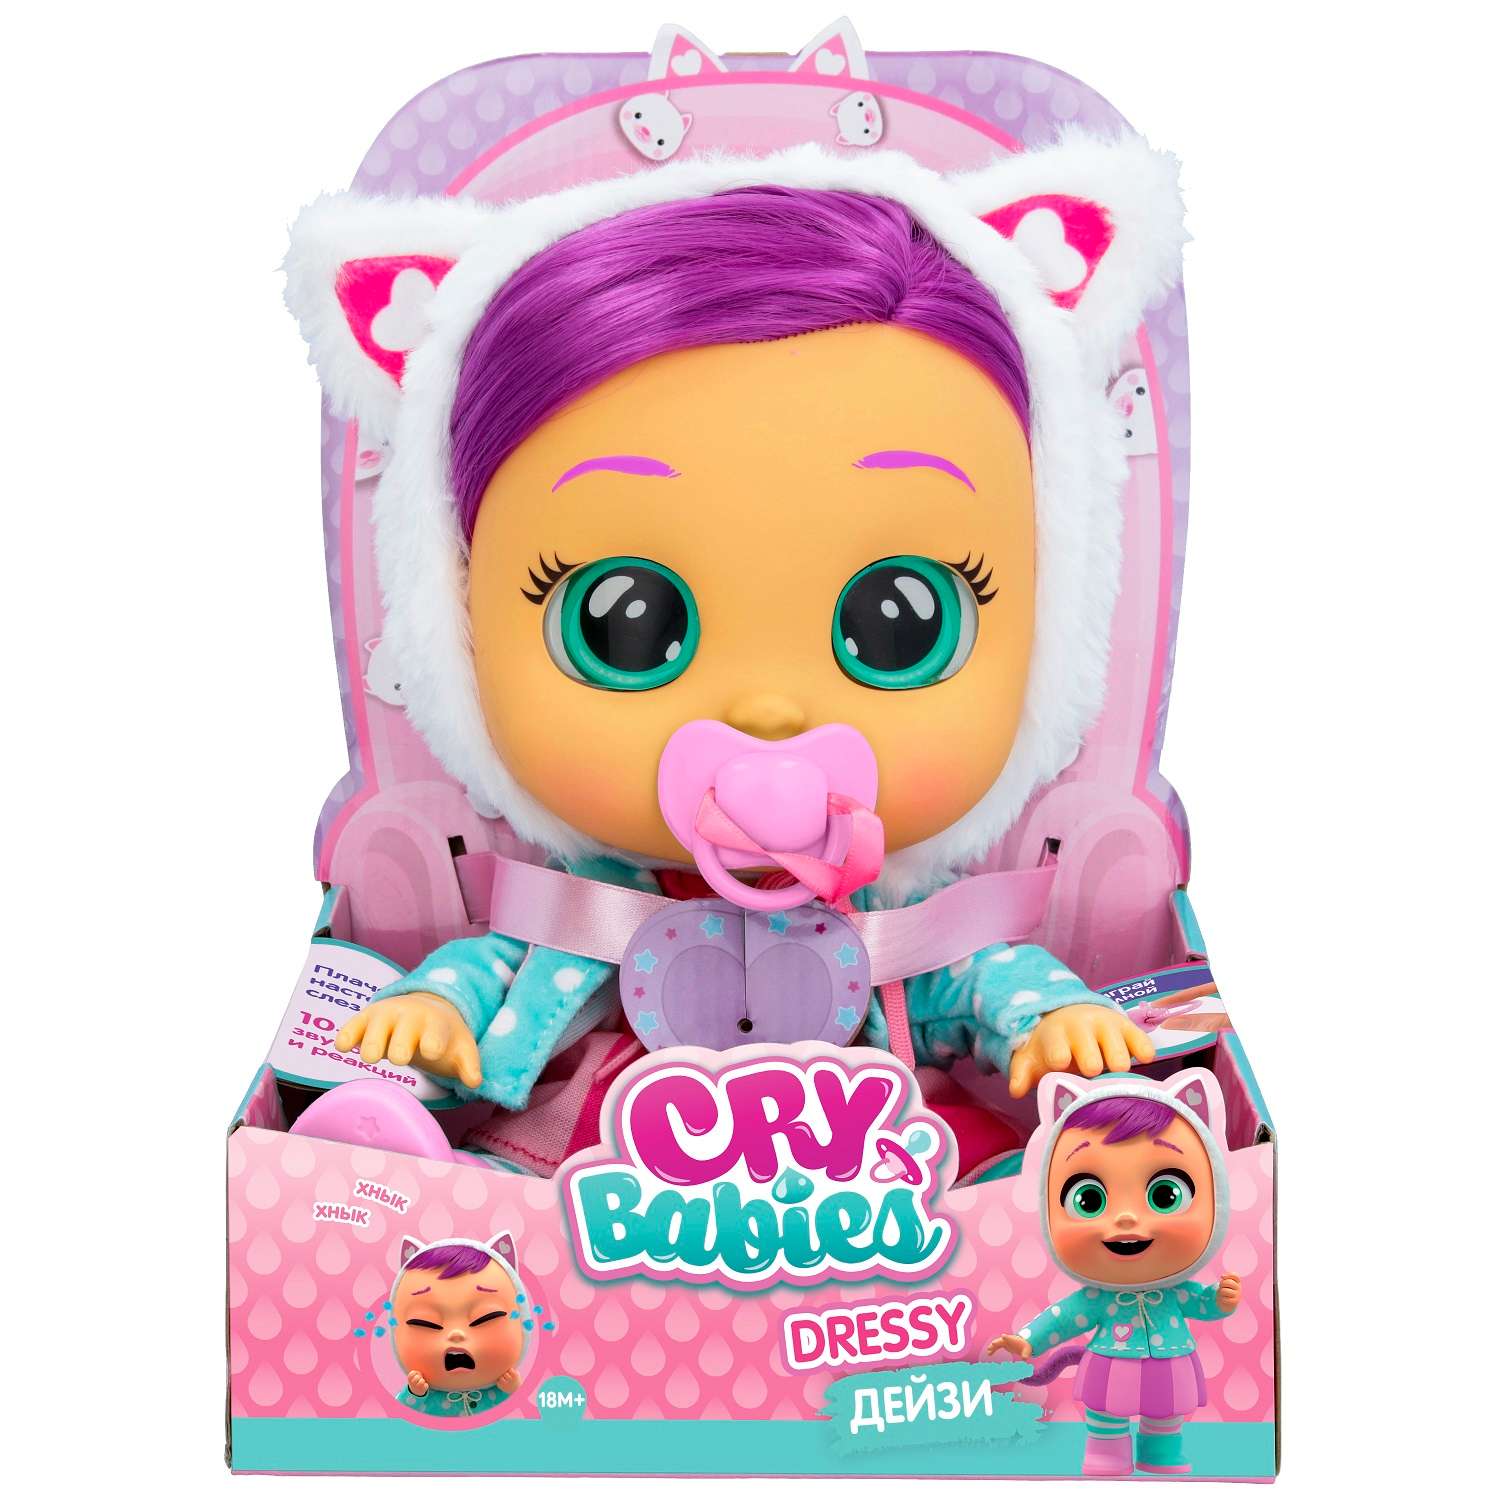 Кукла Cry Babies Dressy Дейзи интерактивная 40887 40887 - фото 2